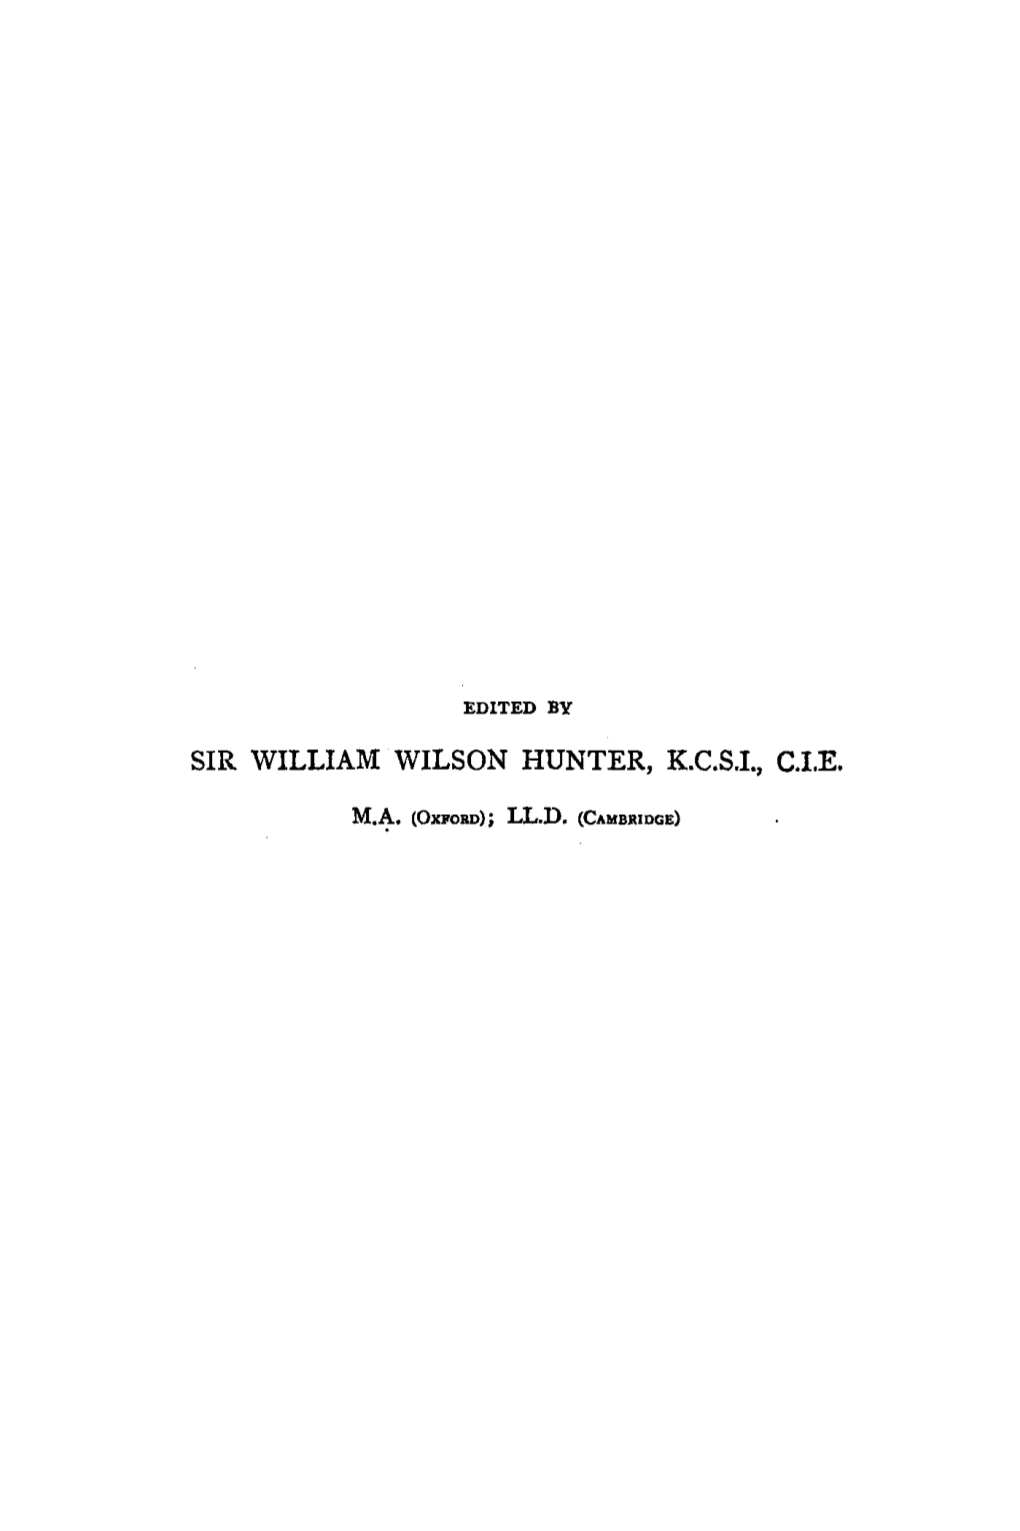 Sir William Wilson Hunter, K.C.S.I., C.I.E